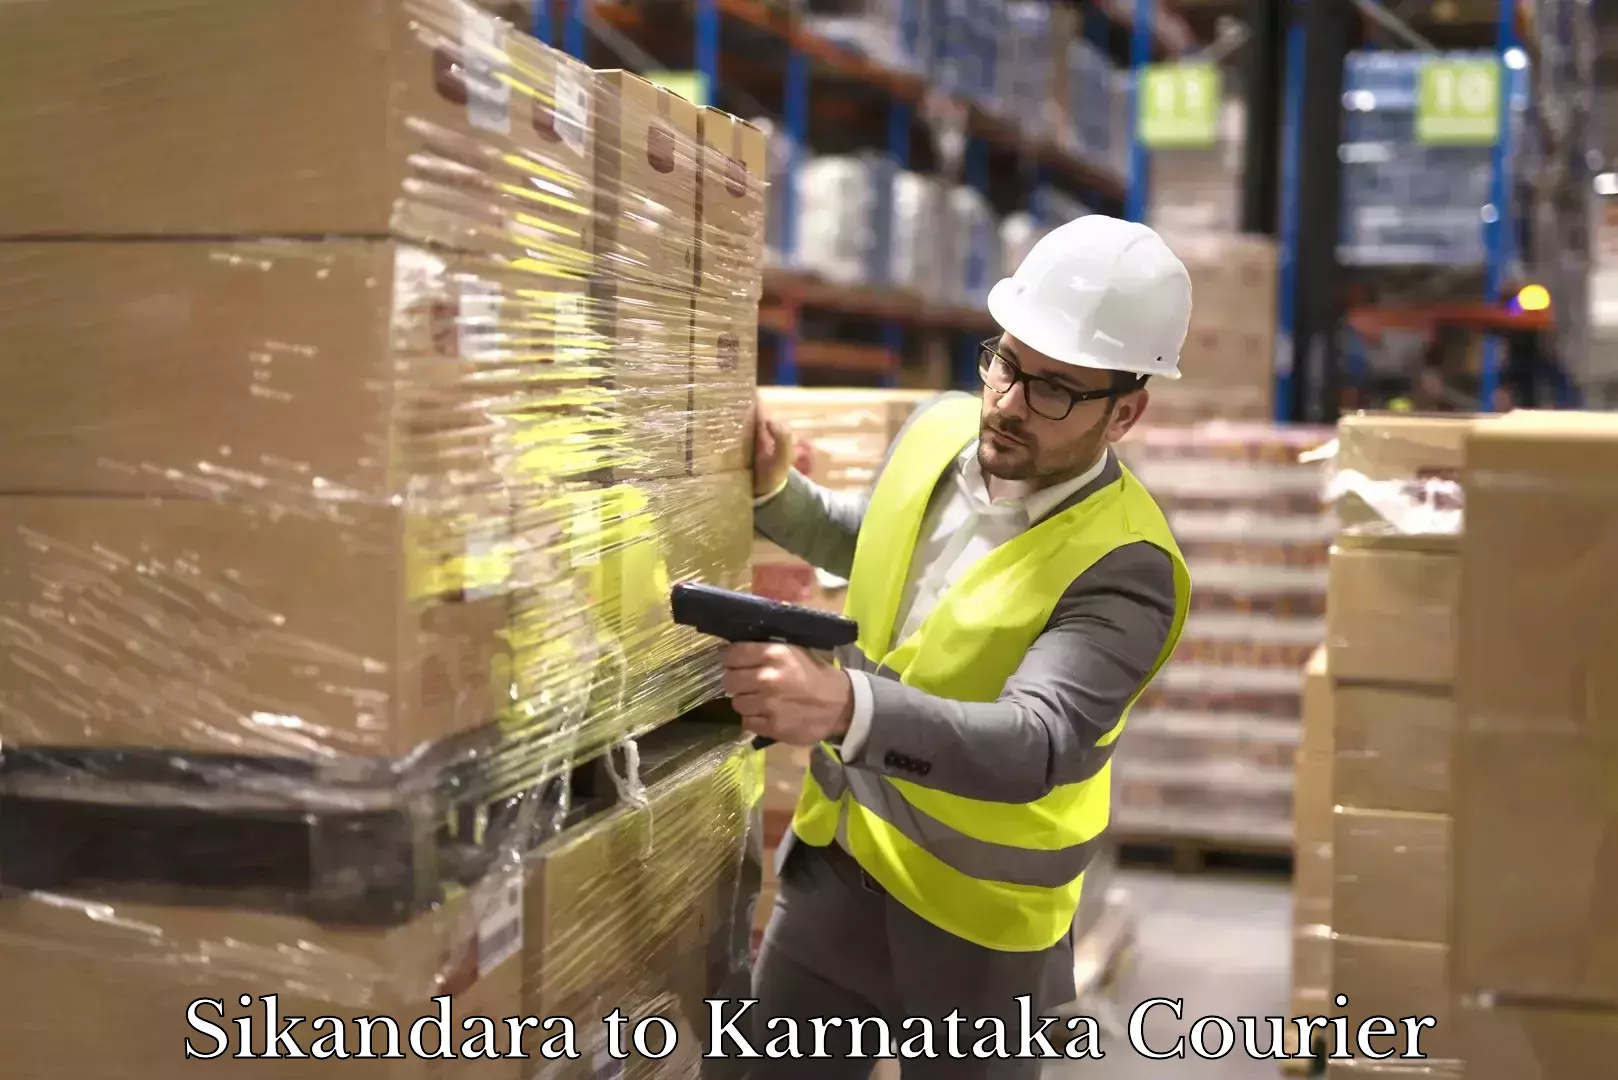 Package delivery network Sikandara to Karnataka